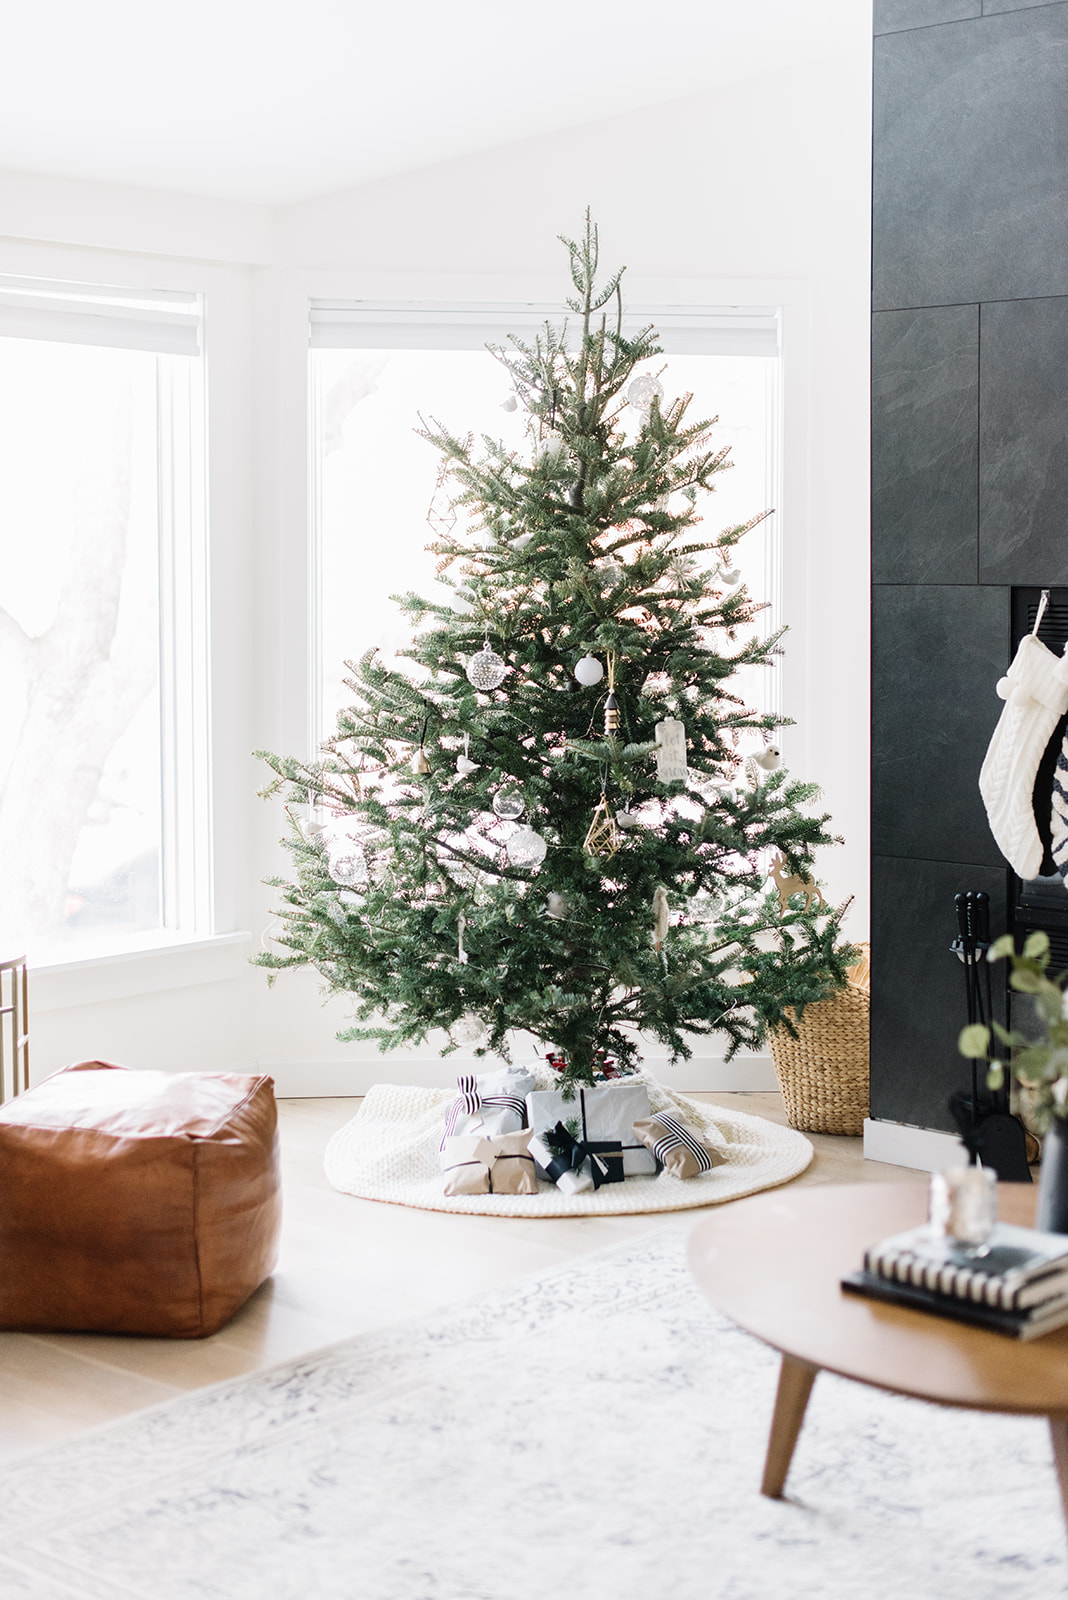 Minimal & Modern Holiday Decor - My Home at Christmas - Kristina Lynne